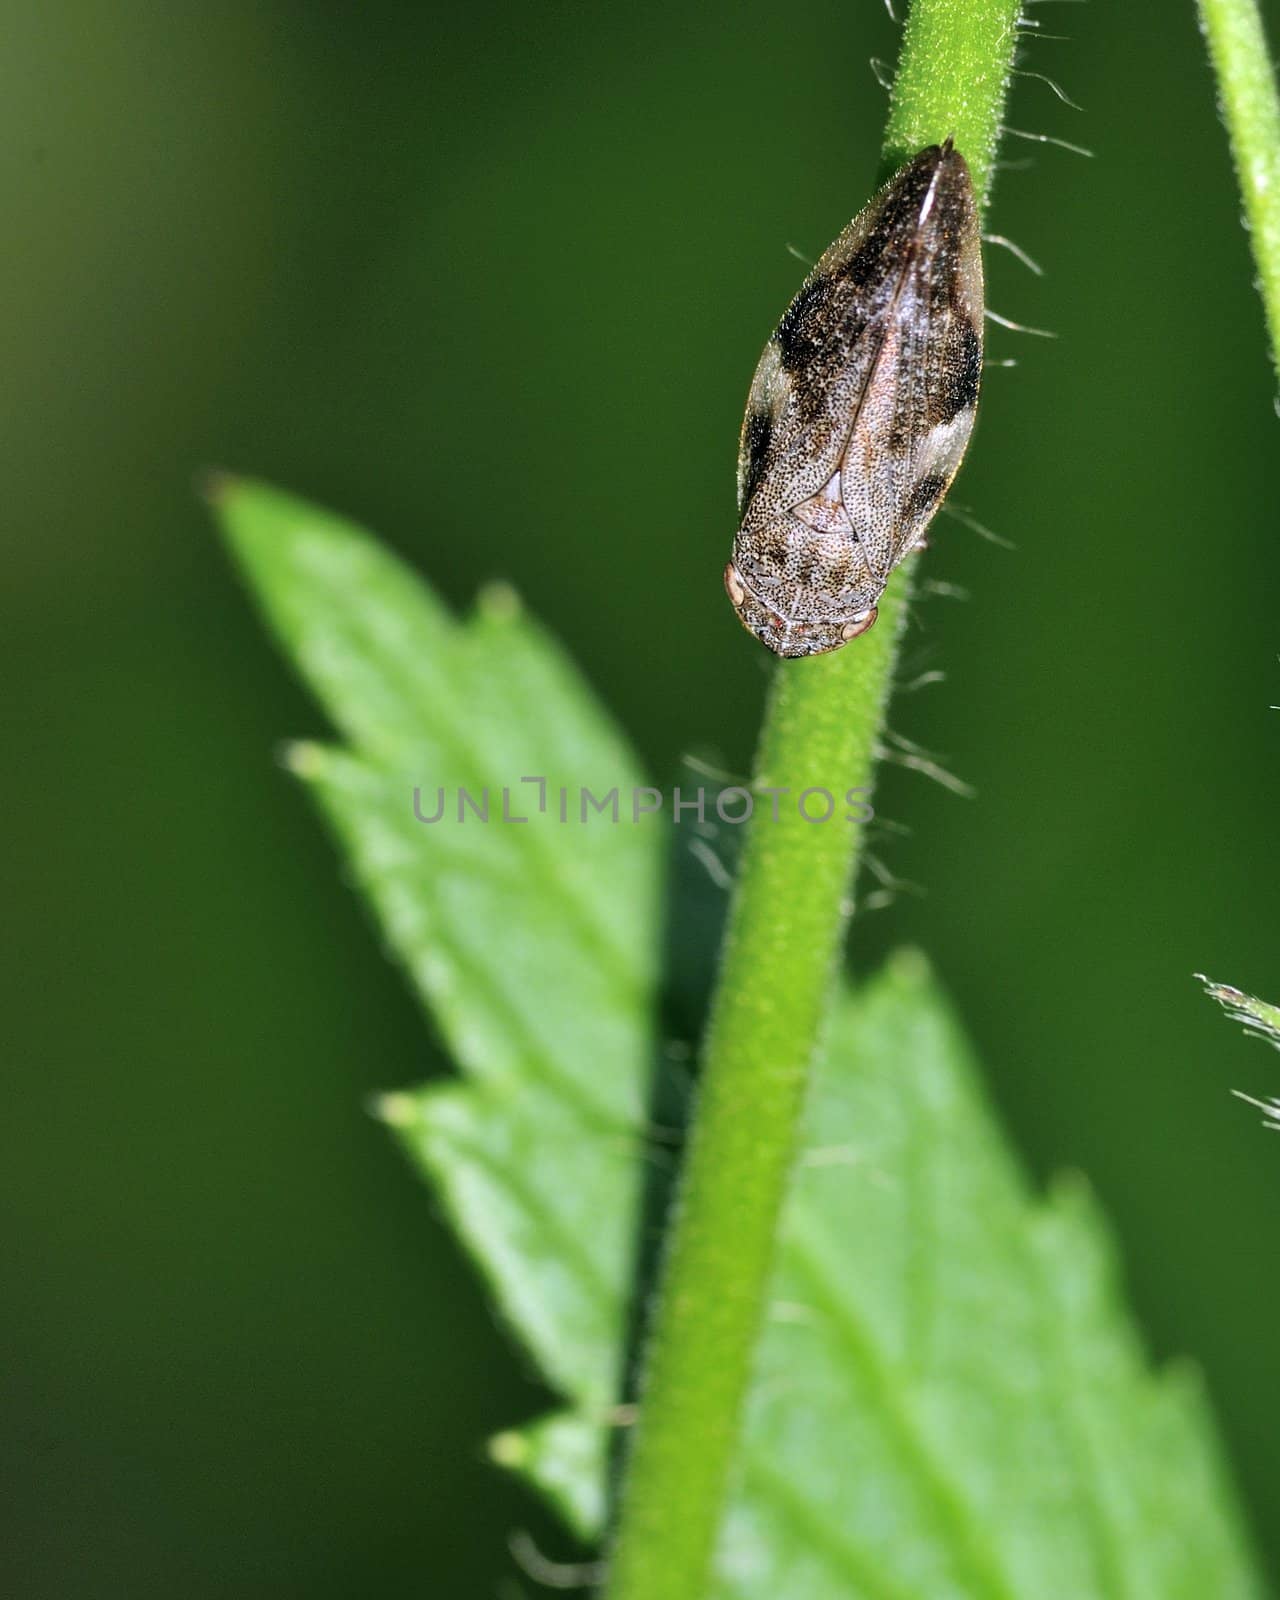 Leafhopper perched on a plant stem.